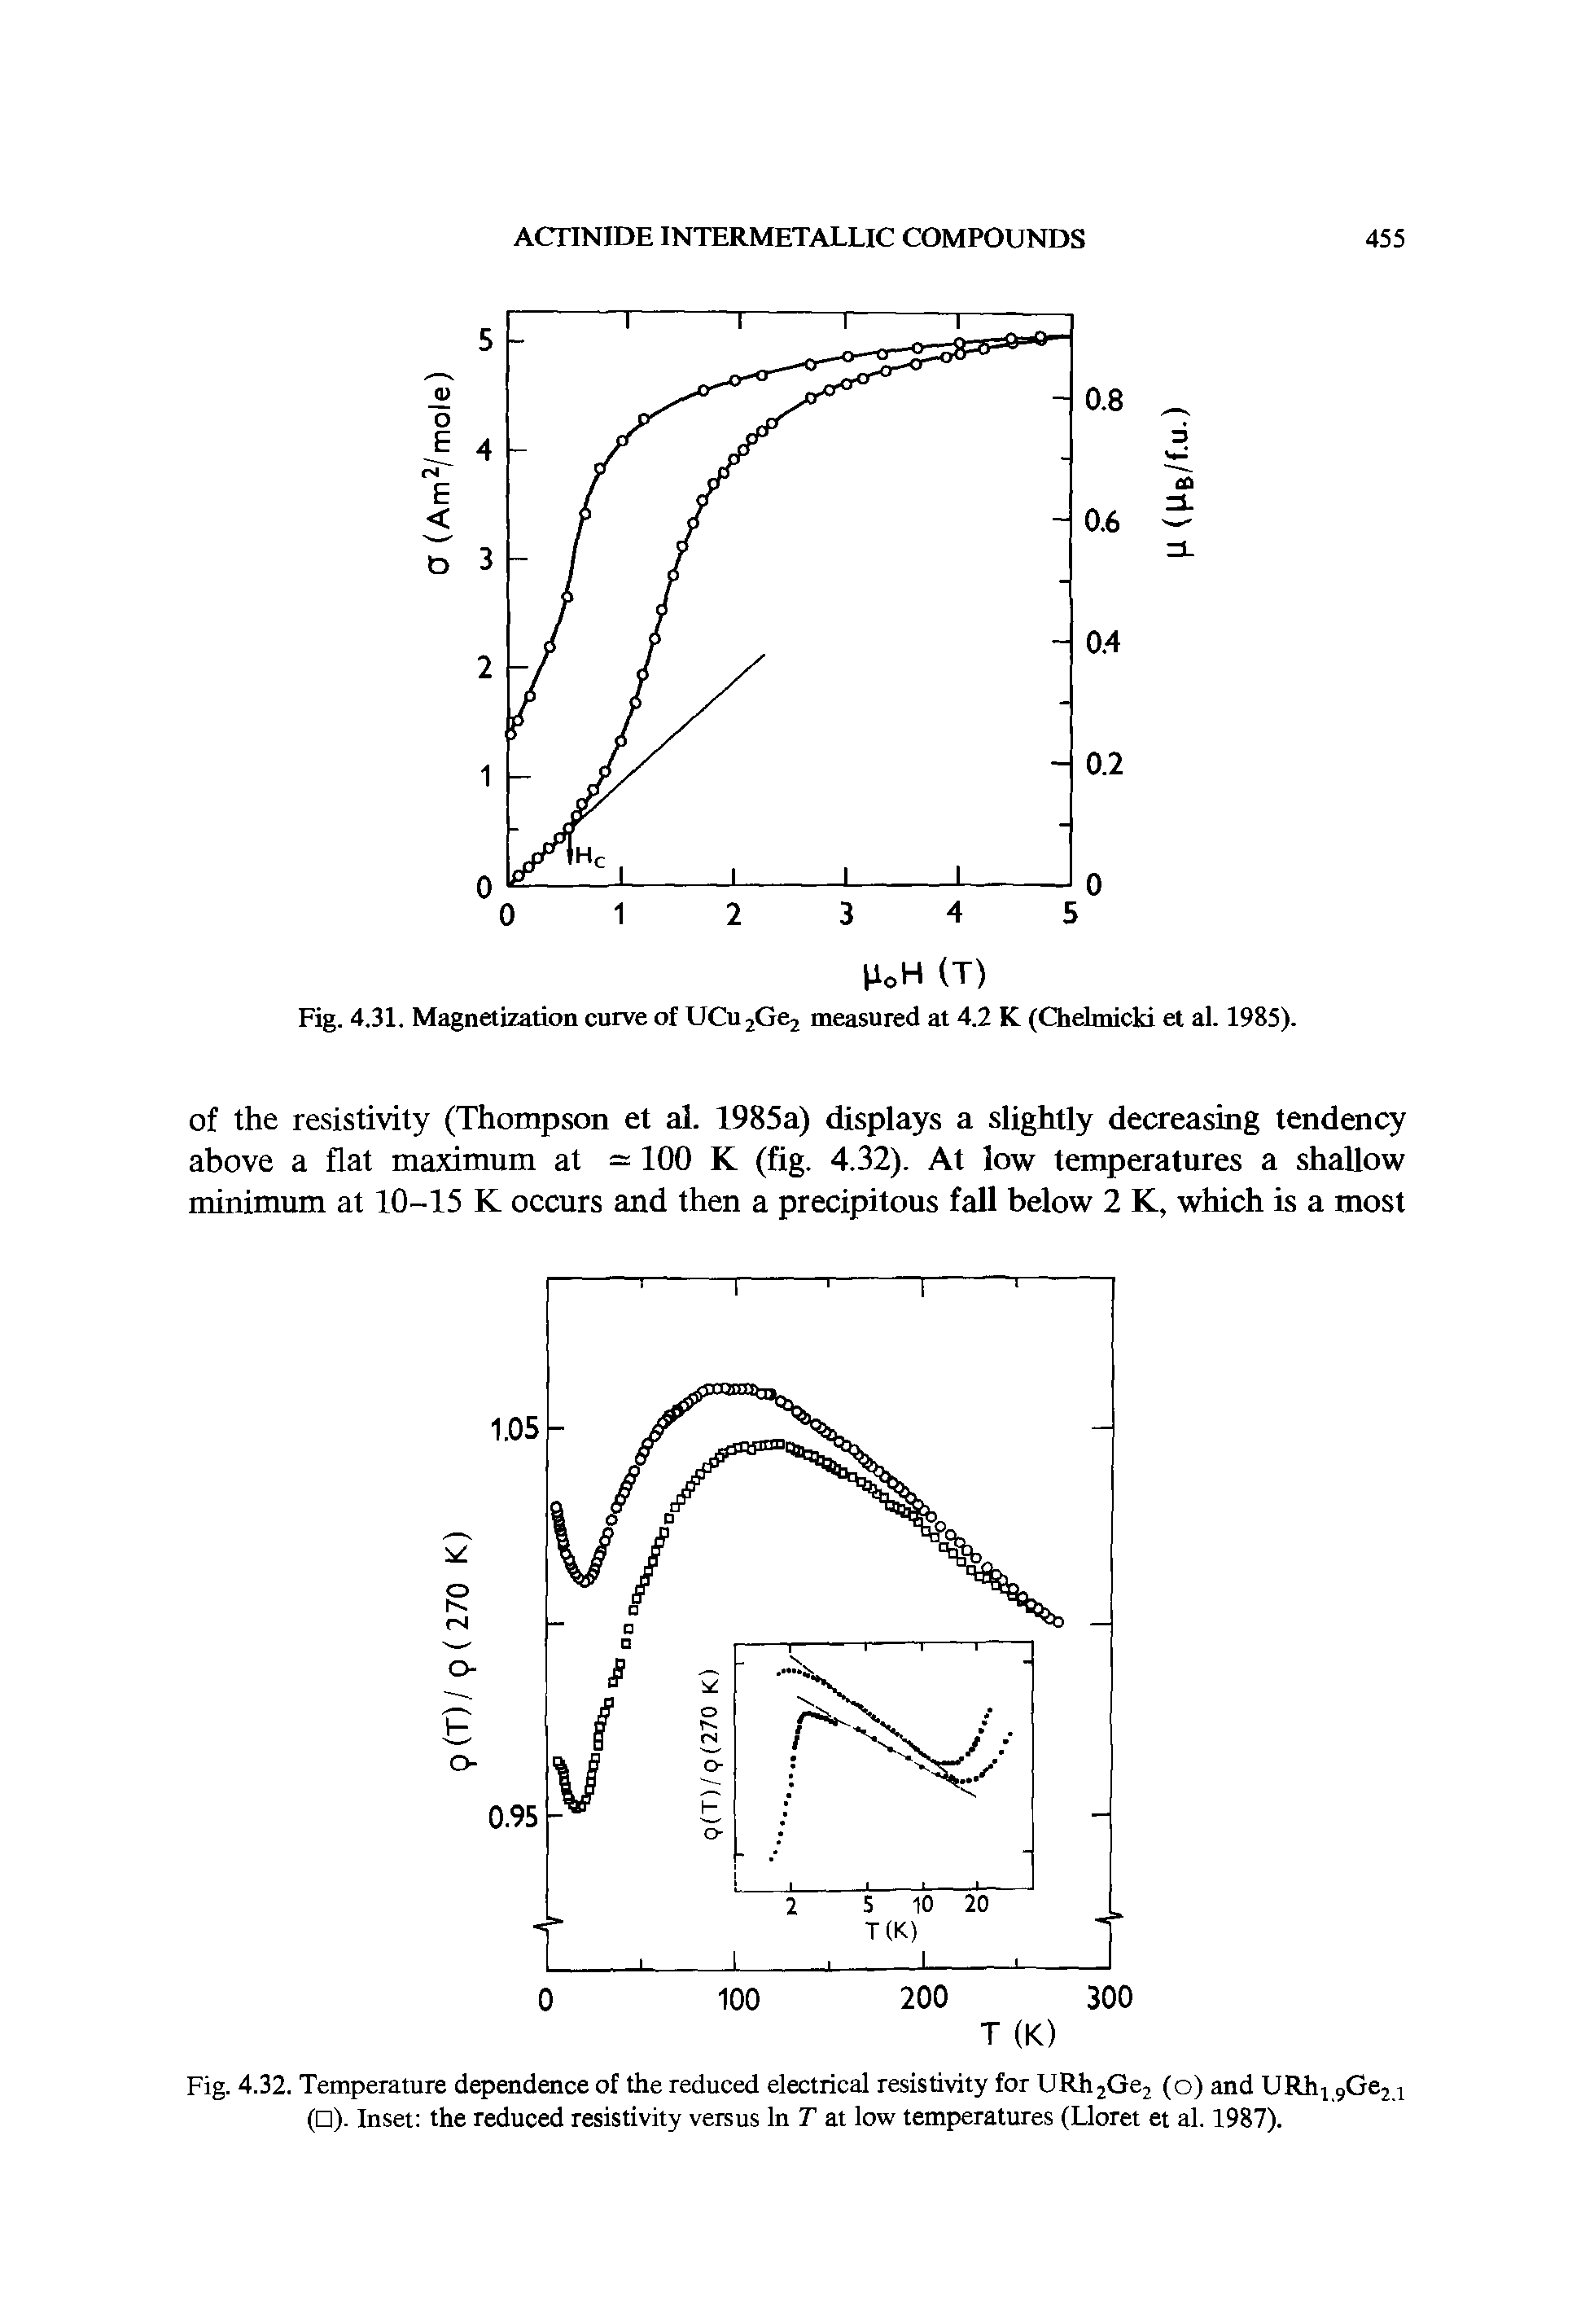 Fig. 4.32. Temperature dependence of the reduced electrical resistivity for URh2Ge2 (o) and URlu 9Ge2, ( ). Inset the reduced resistivity versus In T at low temperatures (Lloret et al. 1987).